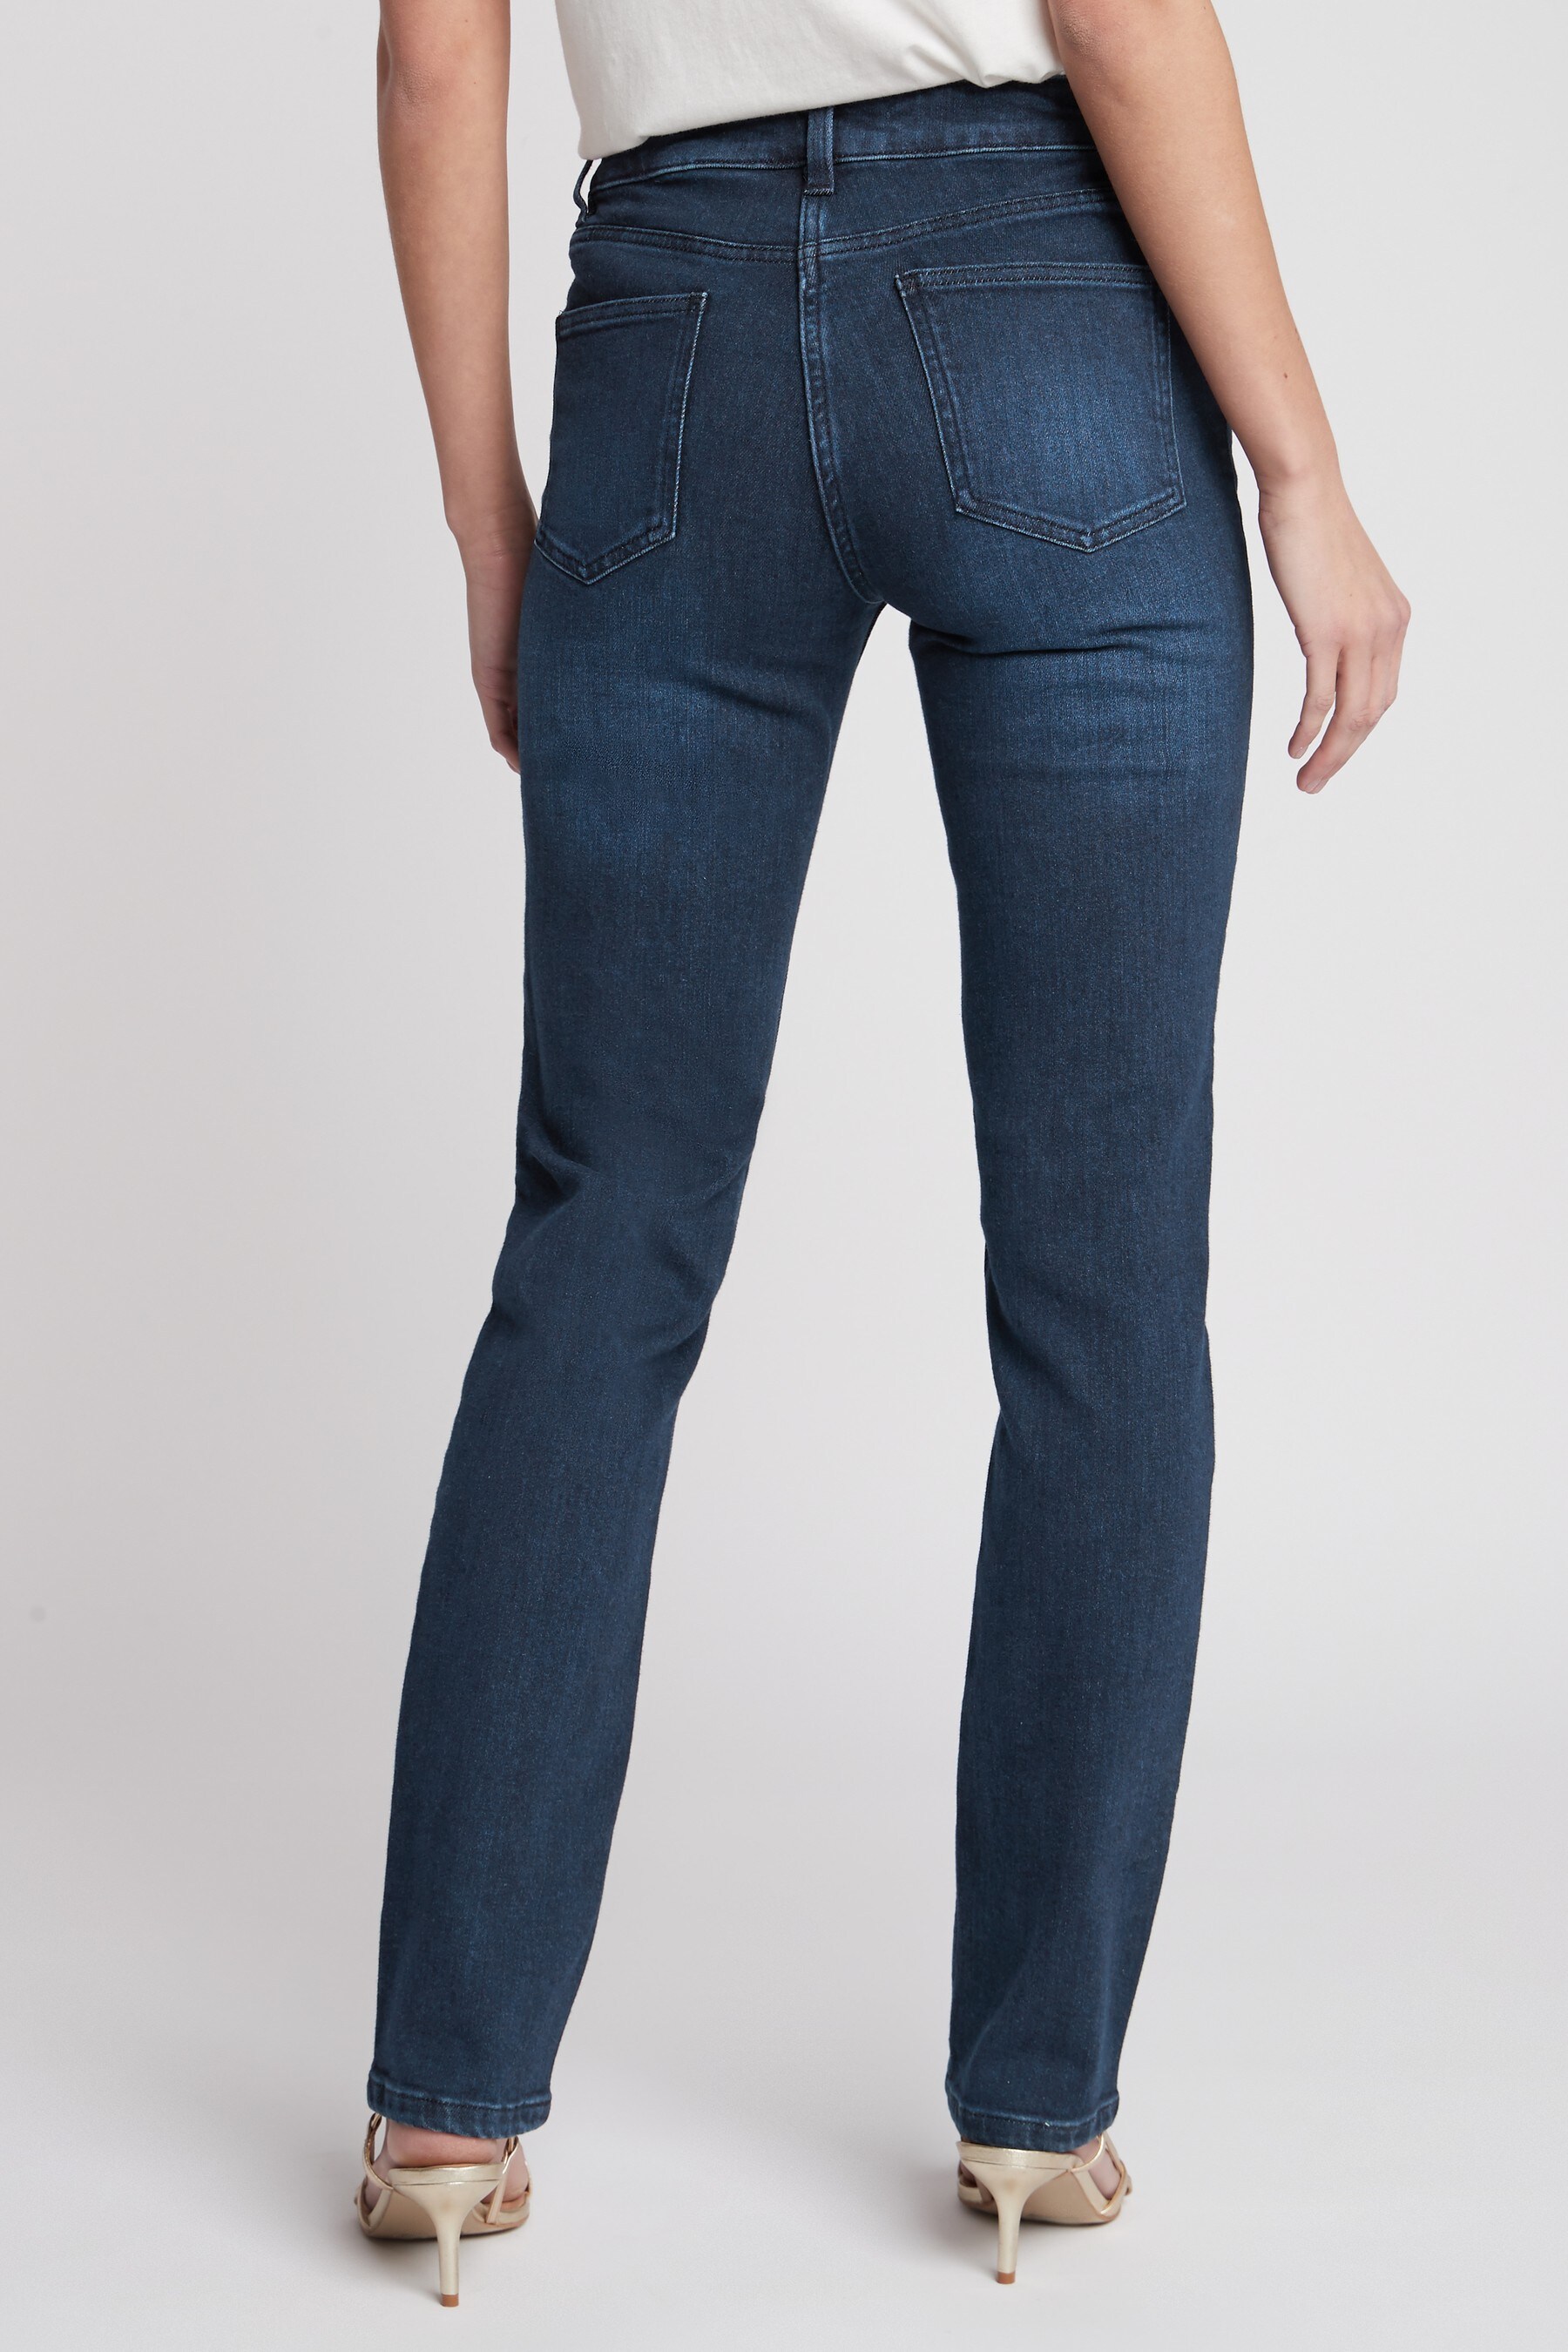 Buy Dark Blue Slim Jeans from the Next UK online shop